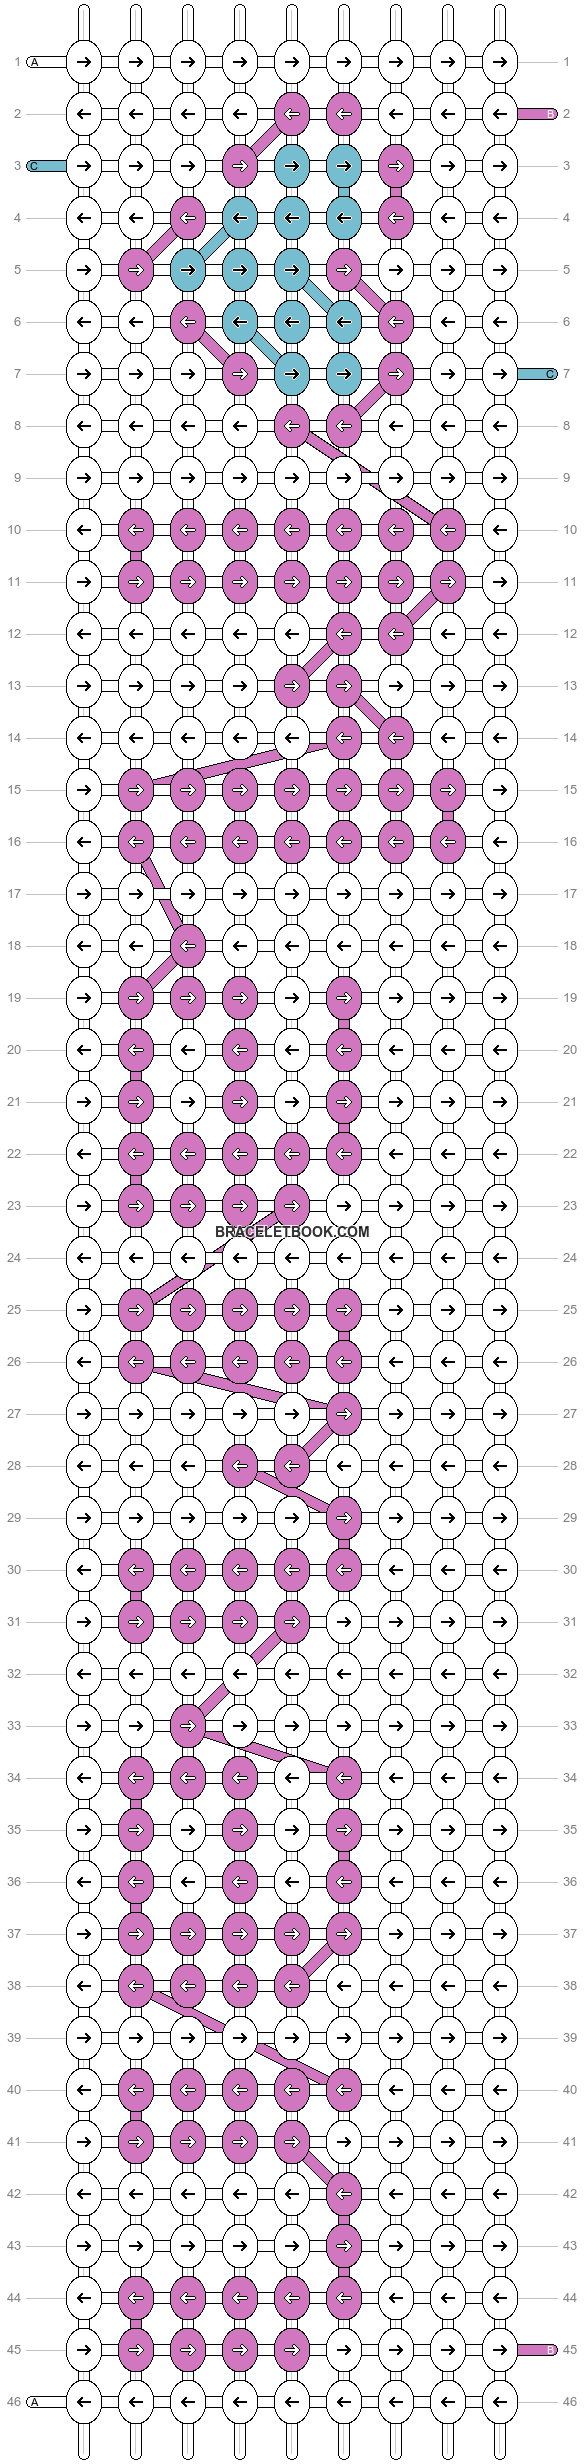 Alpha pattern #7330 pattern